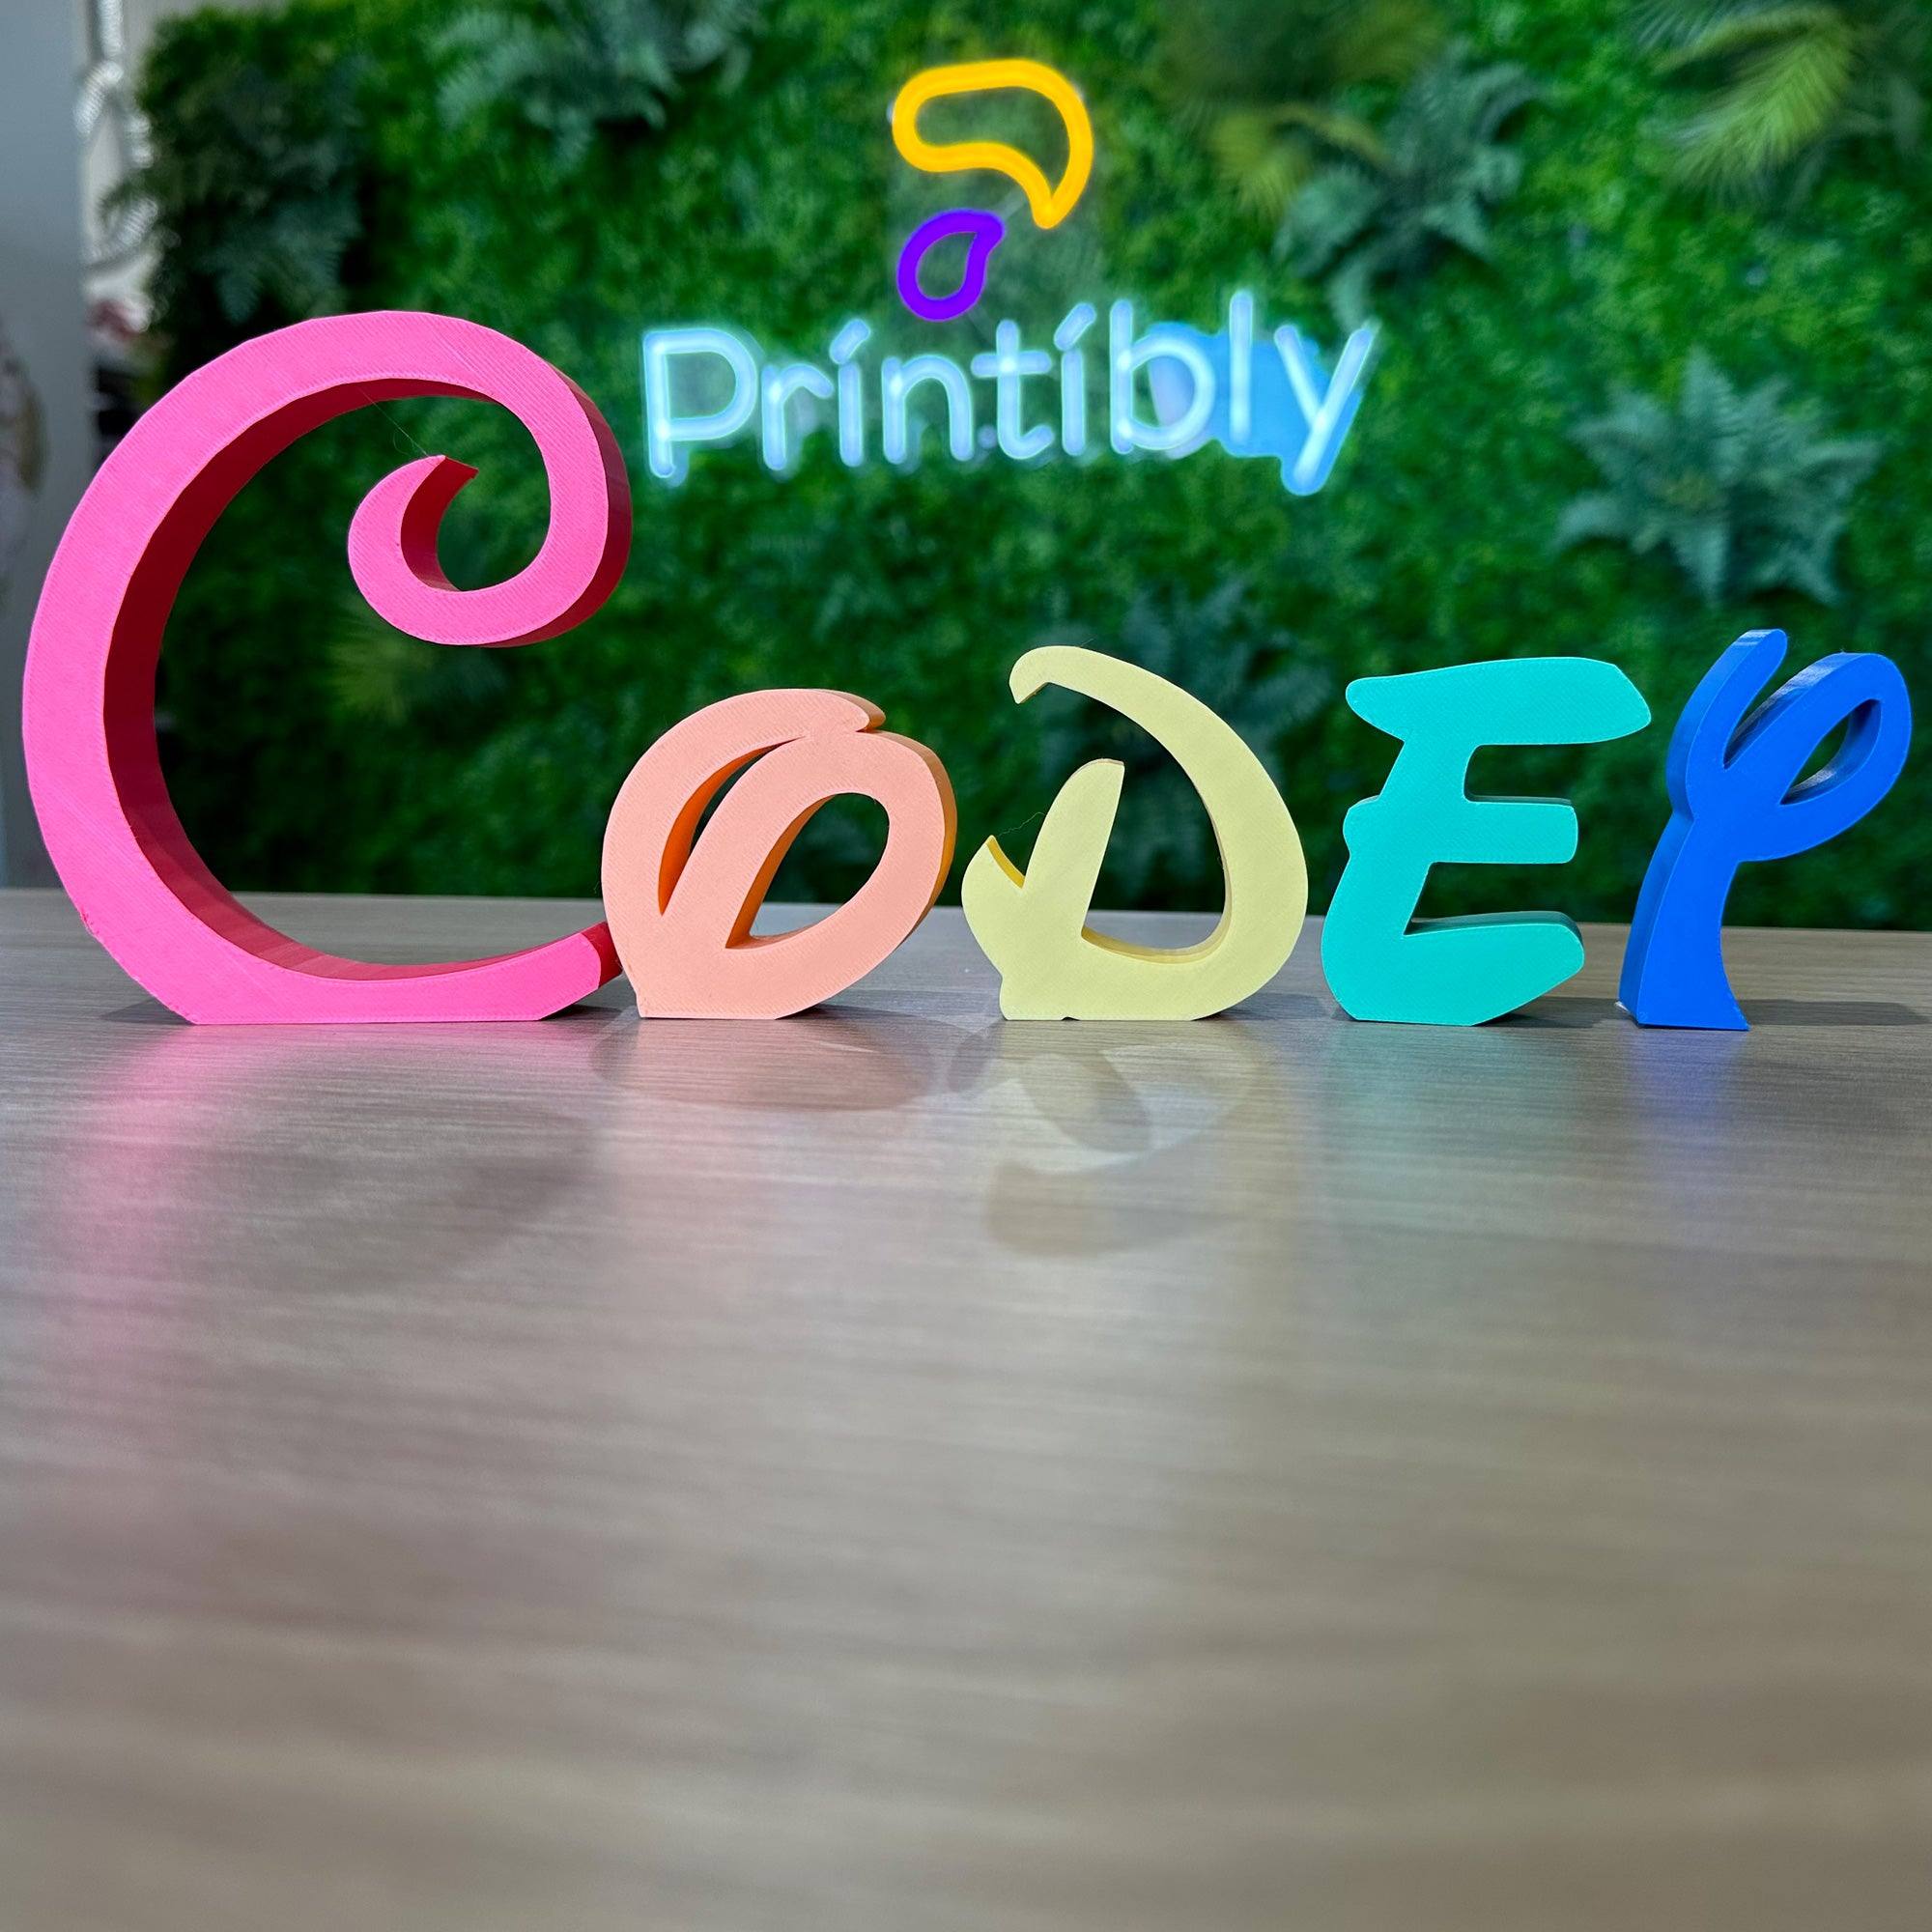 Cursive Disney Inspired Name - 3D Printed - Printibly